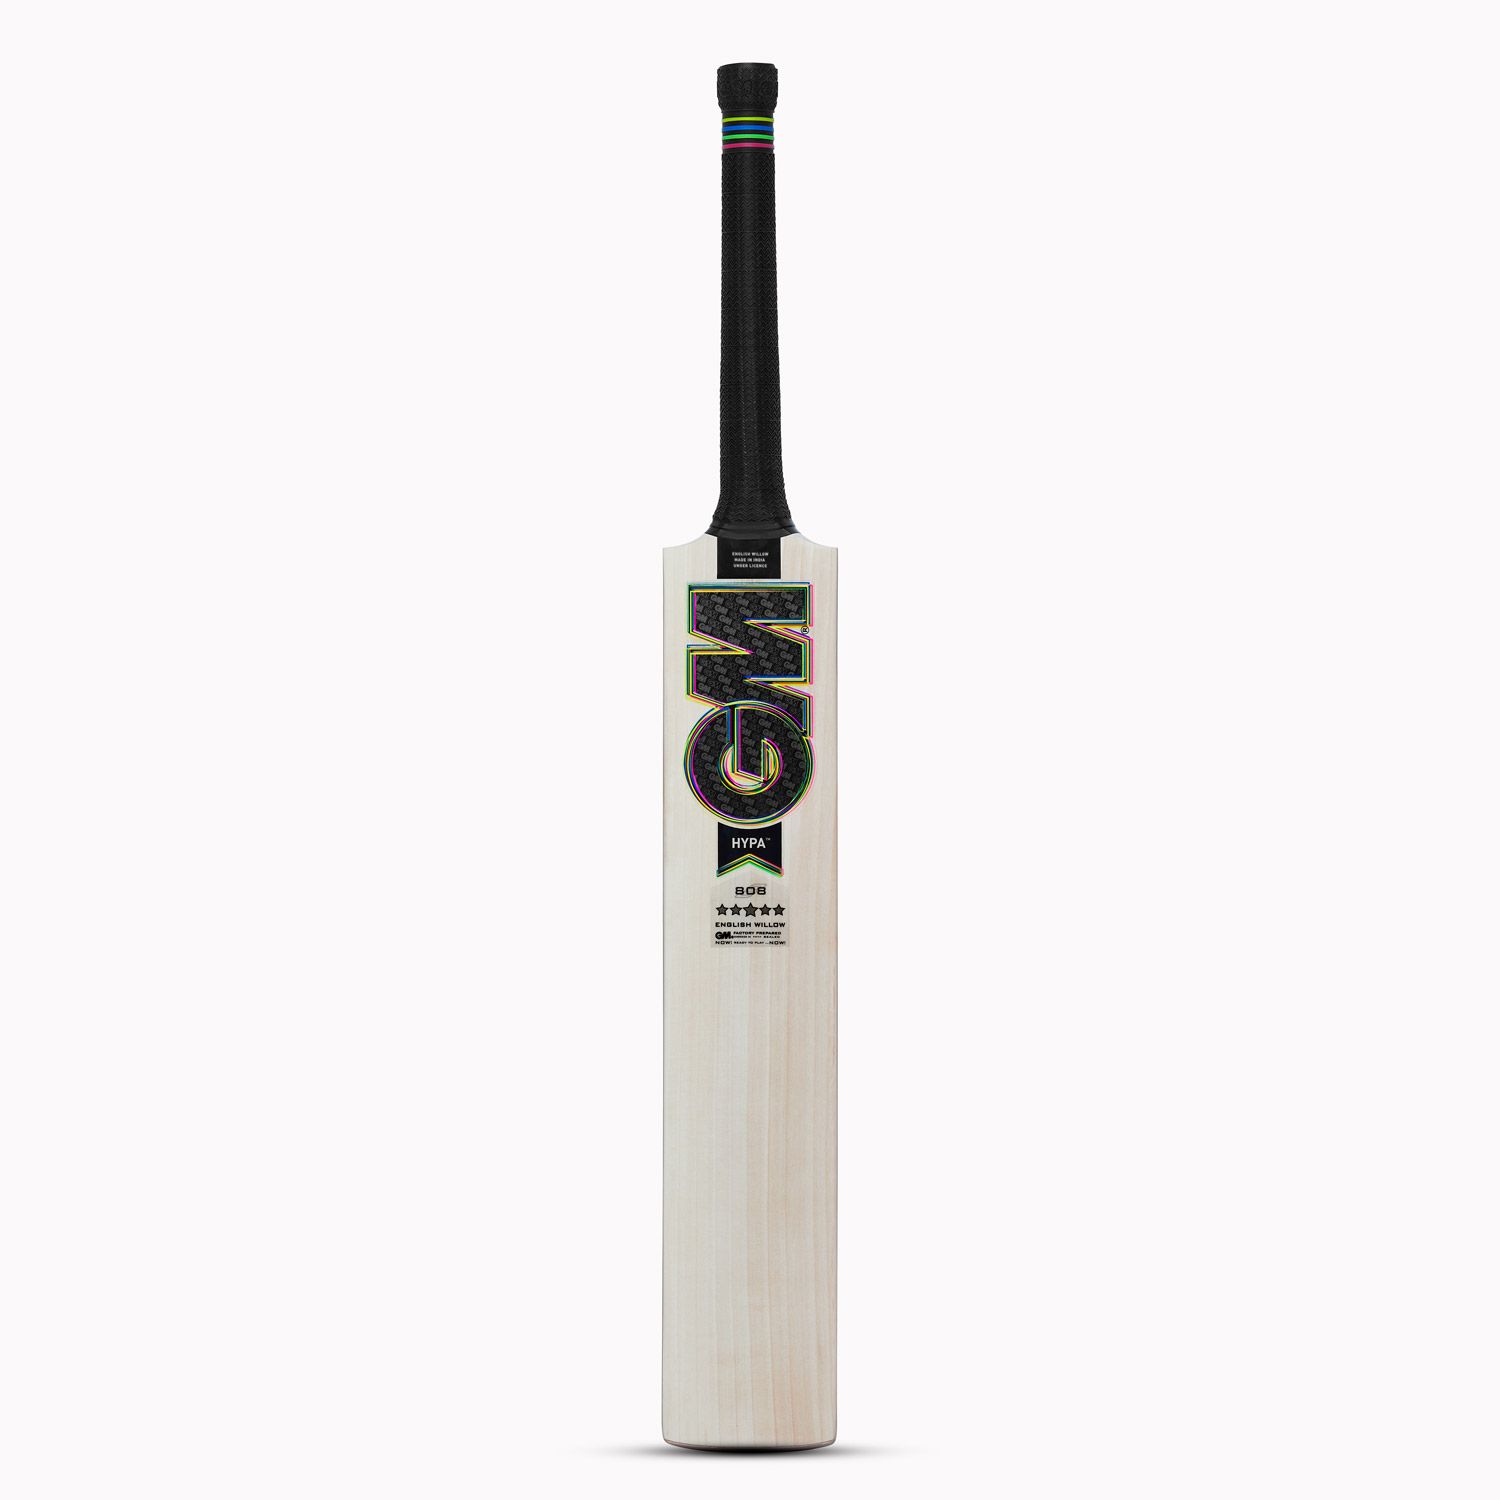 Hypa 808 English Willow Cricket Bat